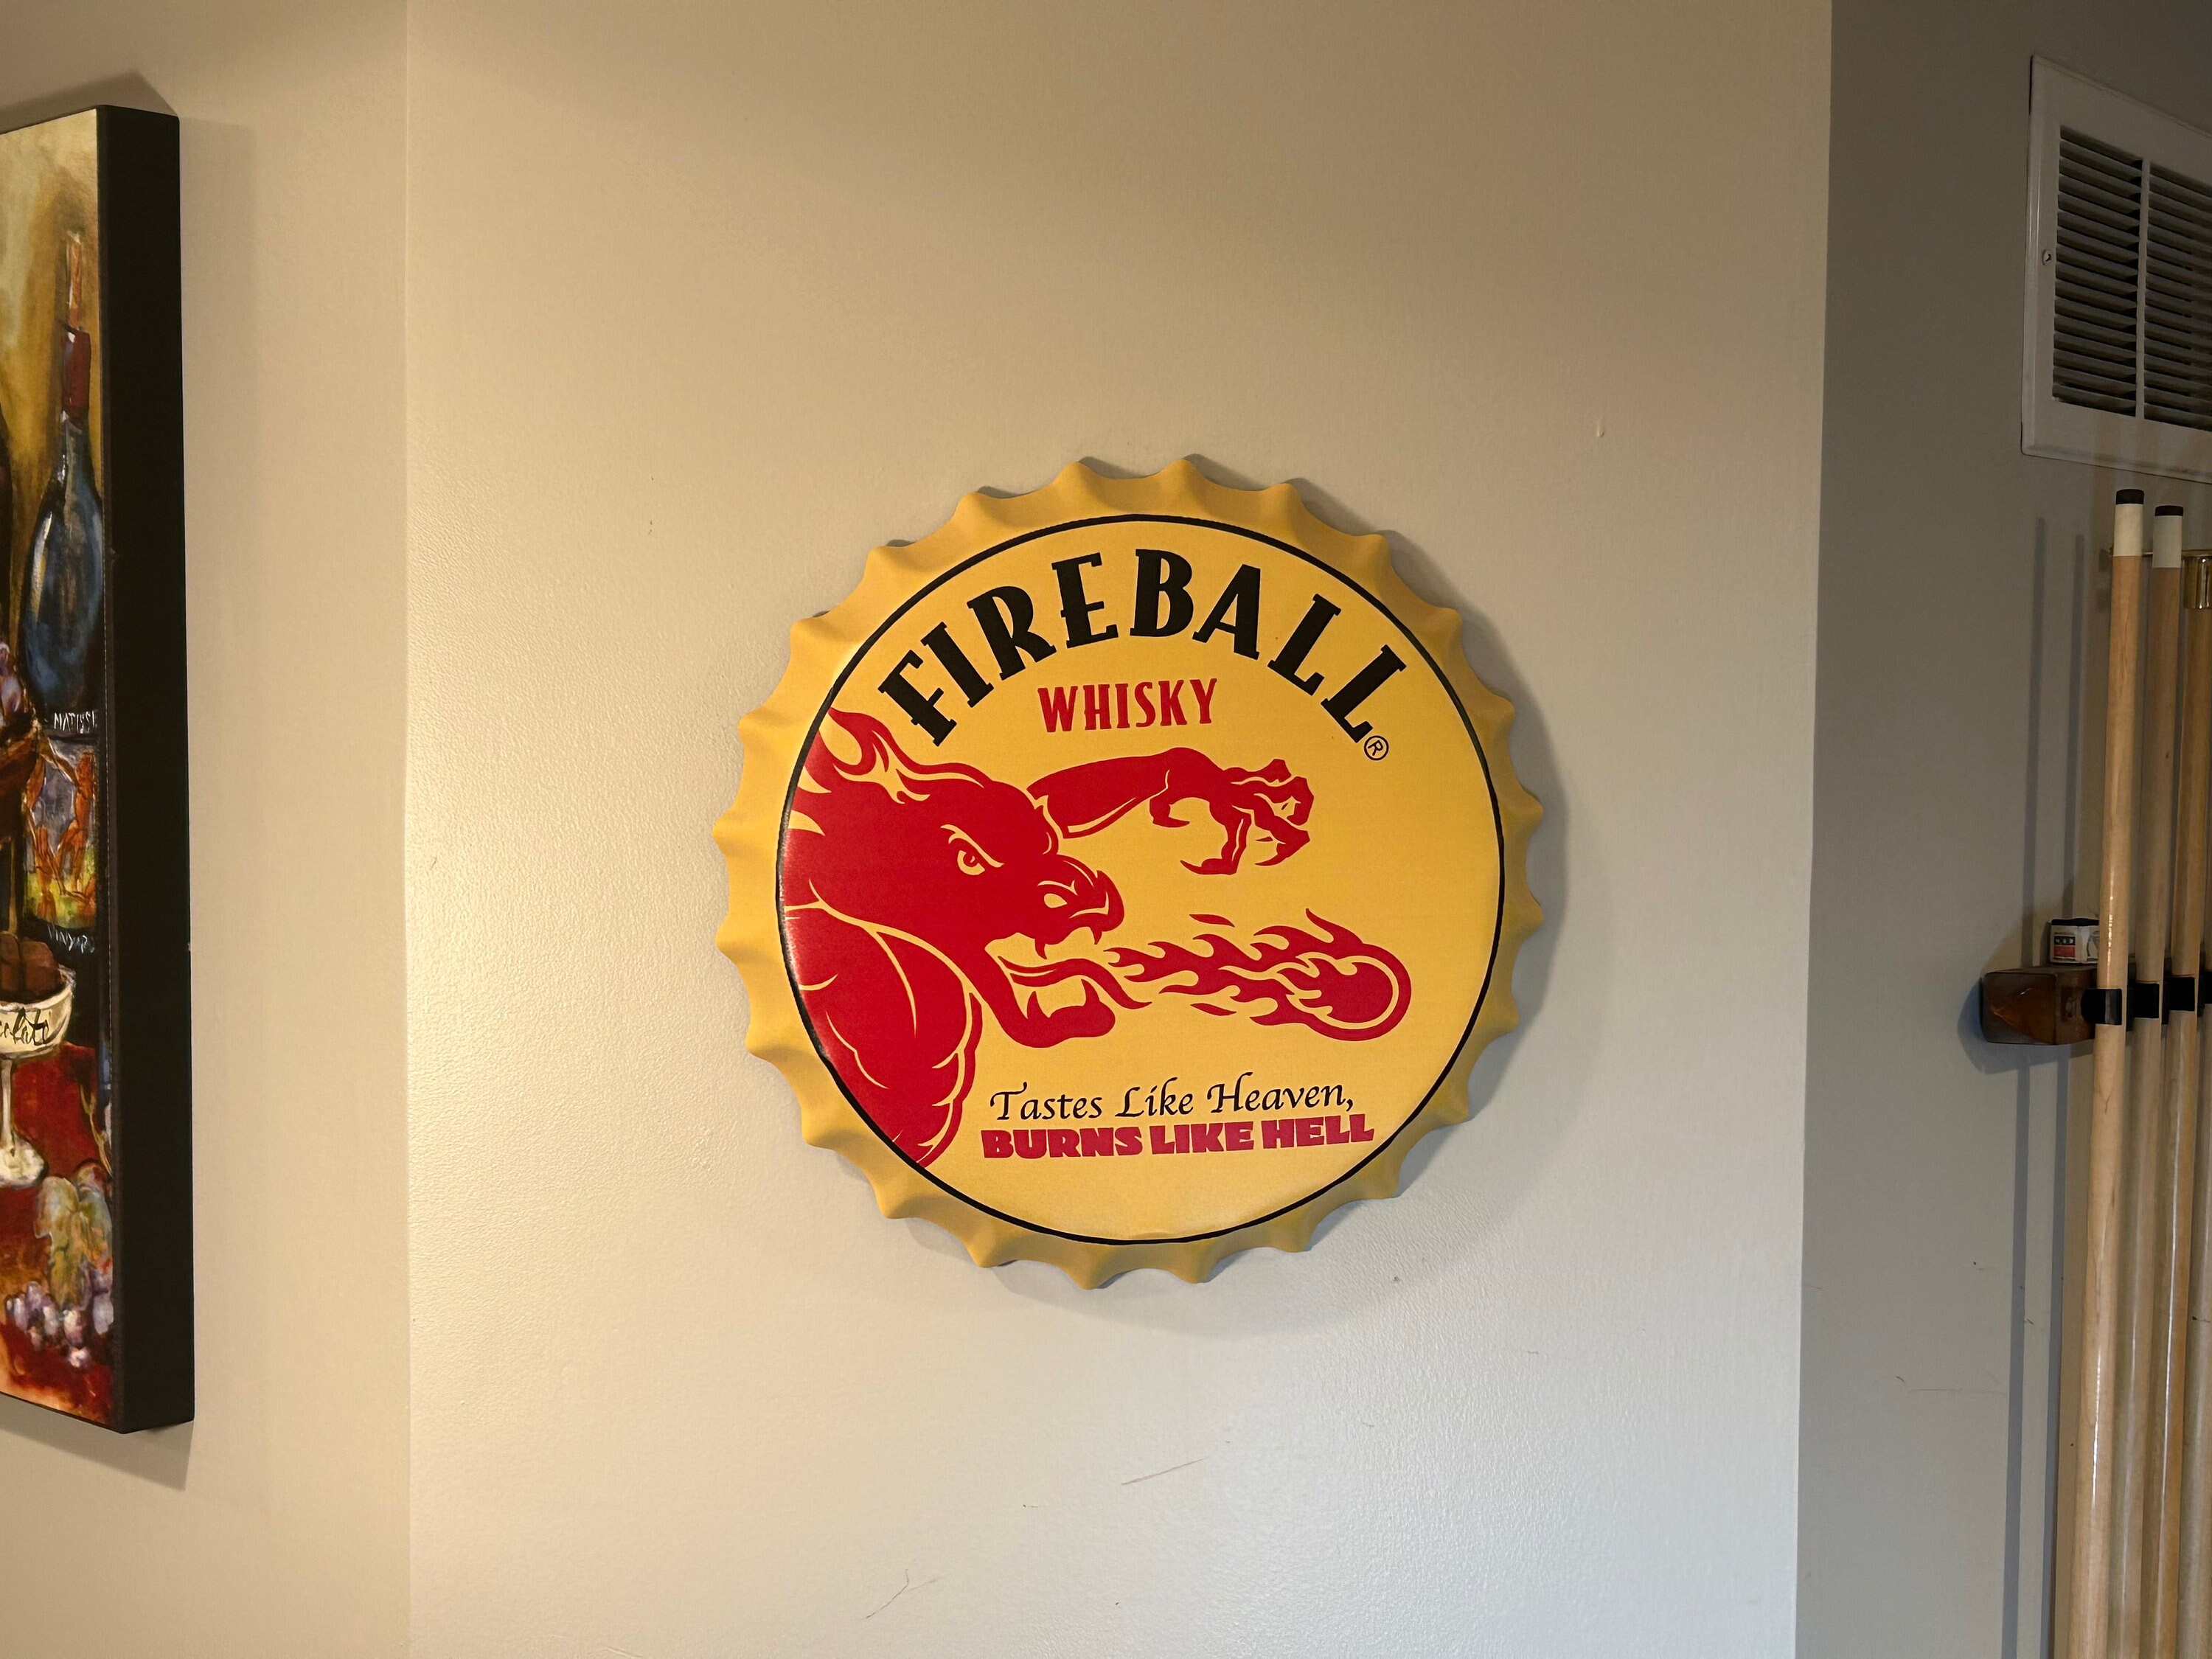 Fireball Baseball Jersey Tastes Like Heaven Burns Like Hell US